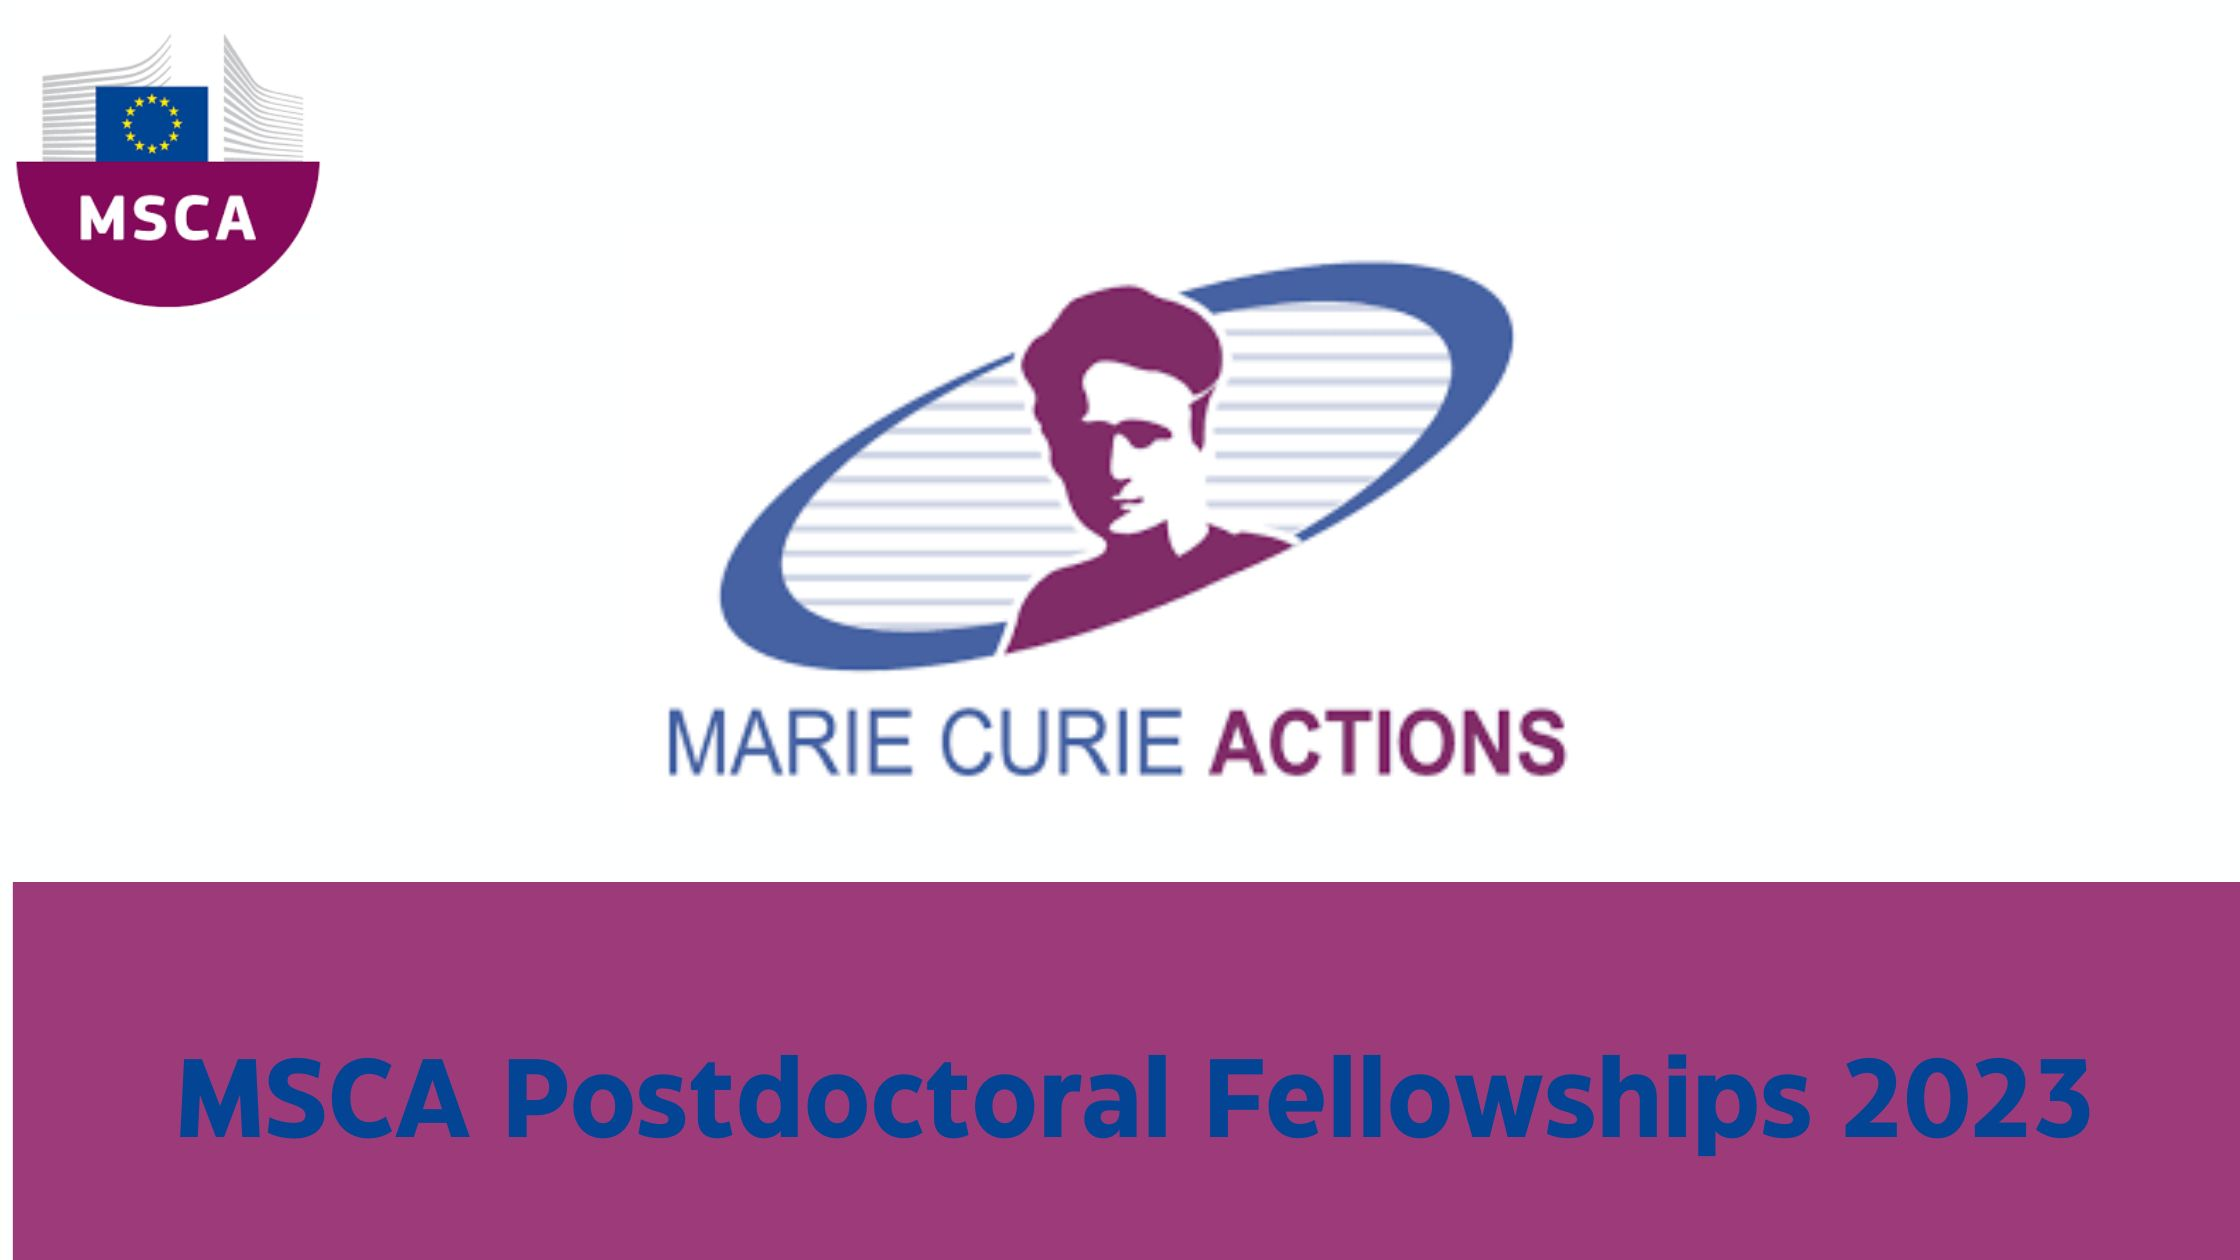 MSCA Postdoctoral Fellowships 2023